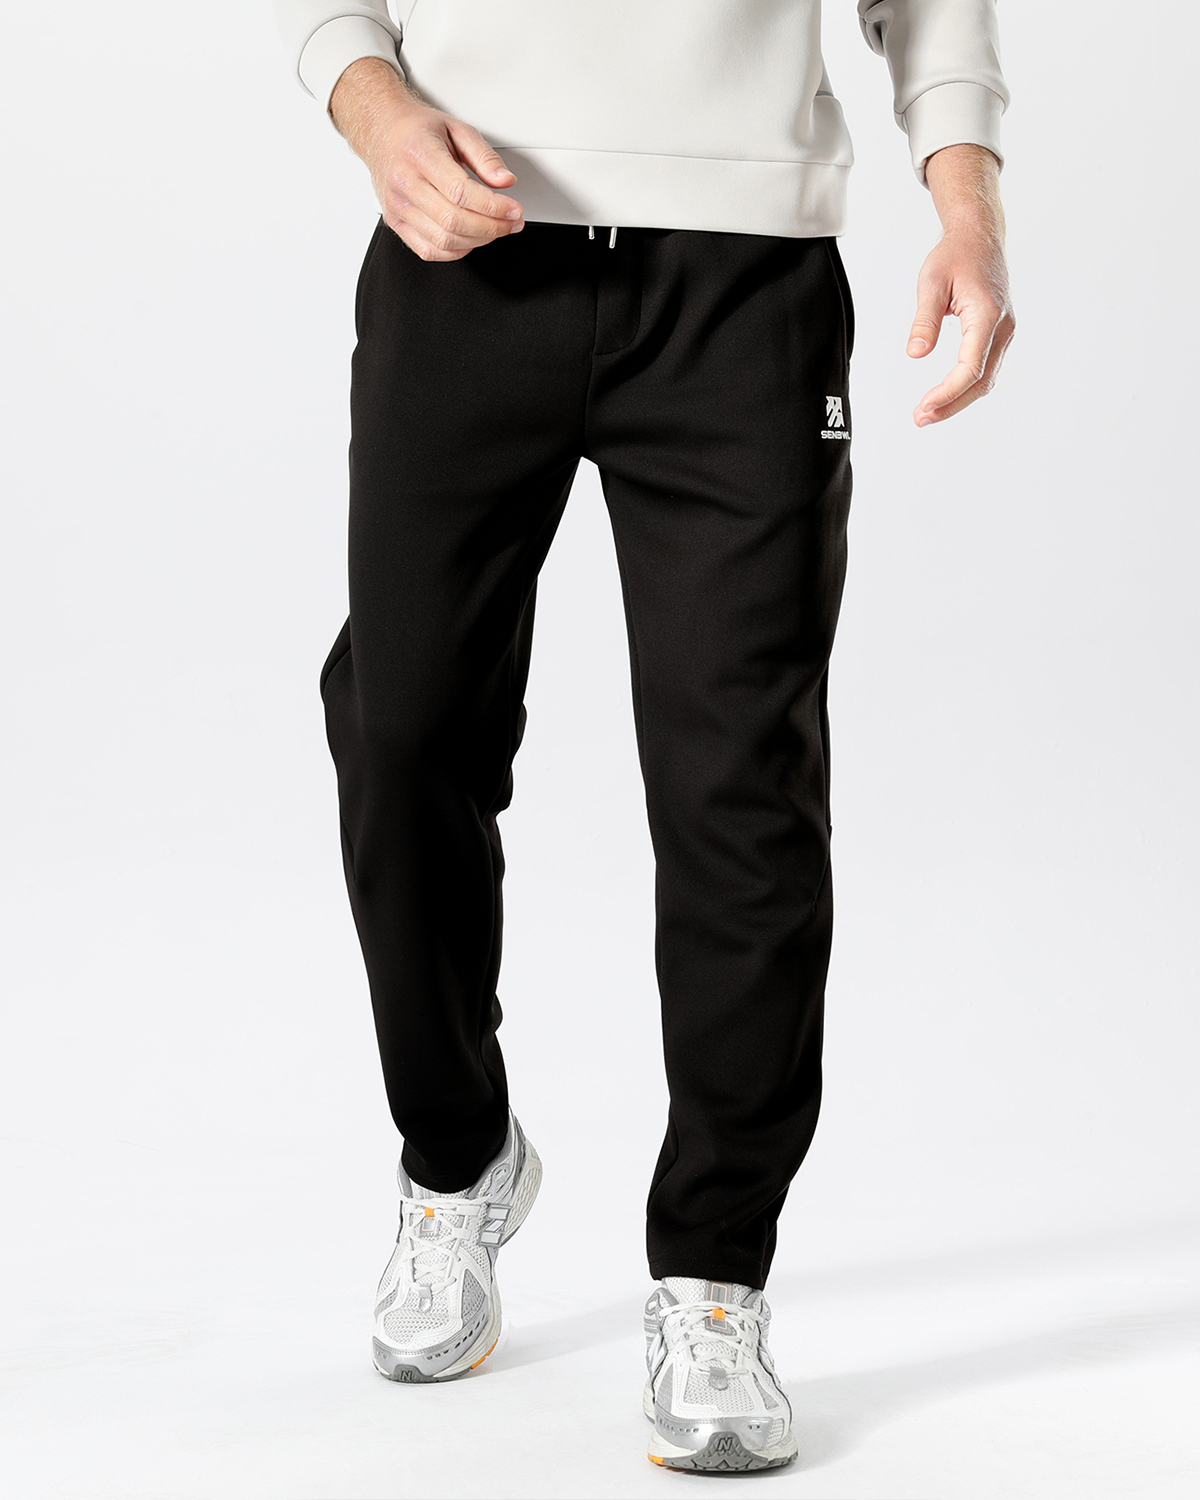 Senbwl Men's Jogger Sweatpants for Spring & Autumn -Senbwl Sports